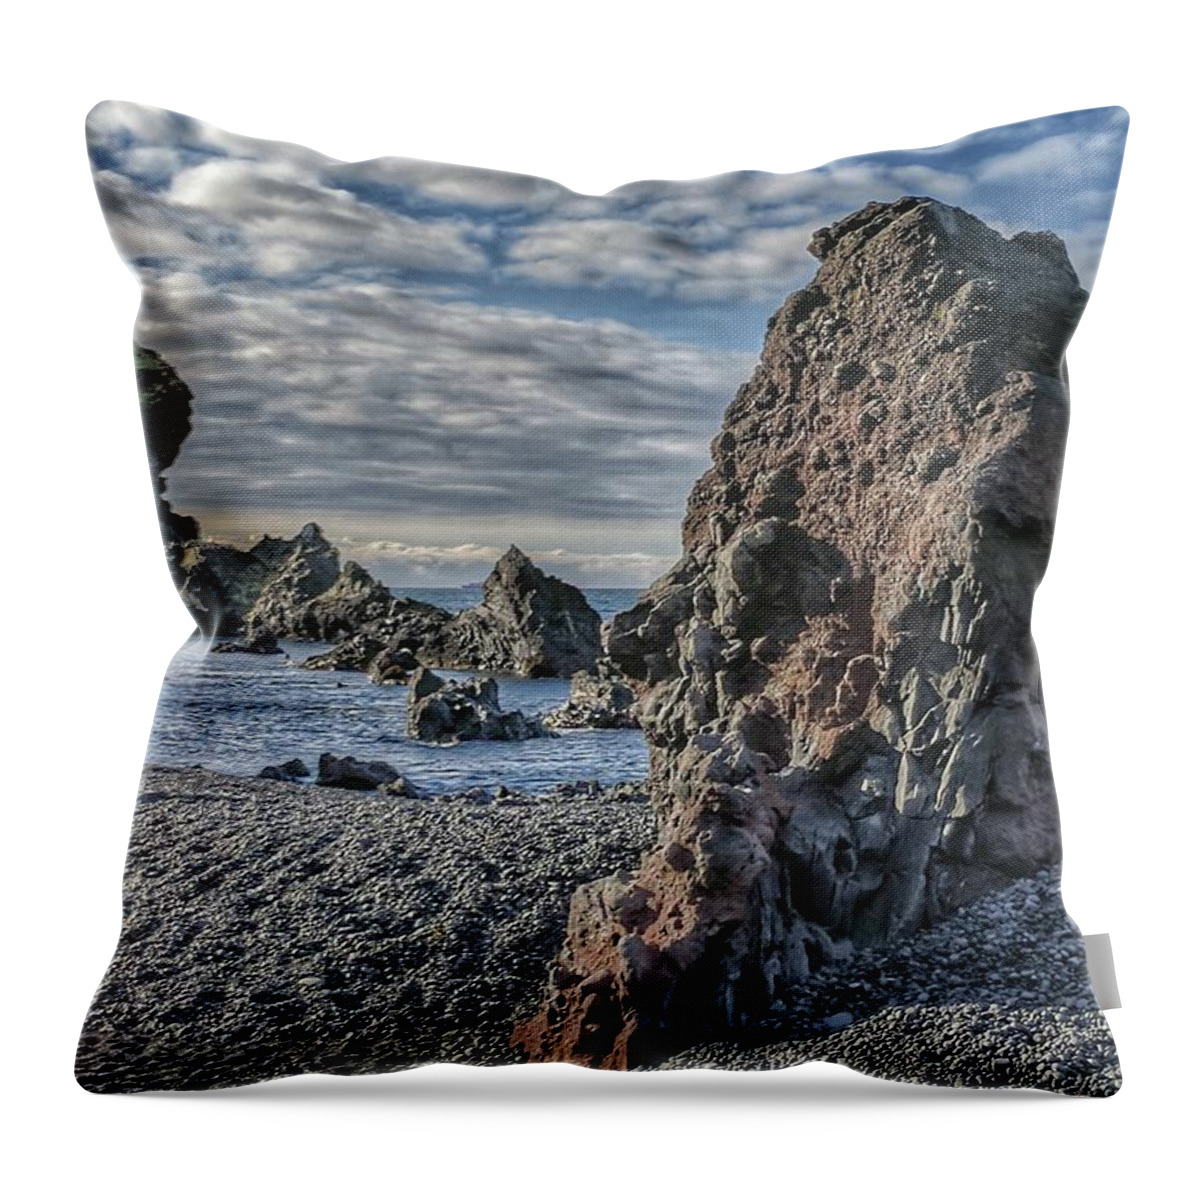 Iceland Throw Pillow featuring the photograph Iceland beach by Yvonne Jasinski